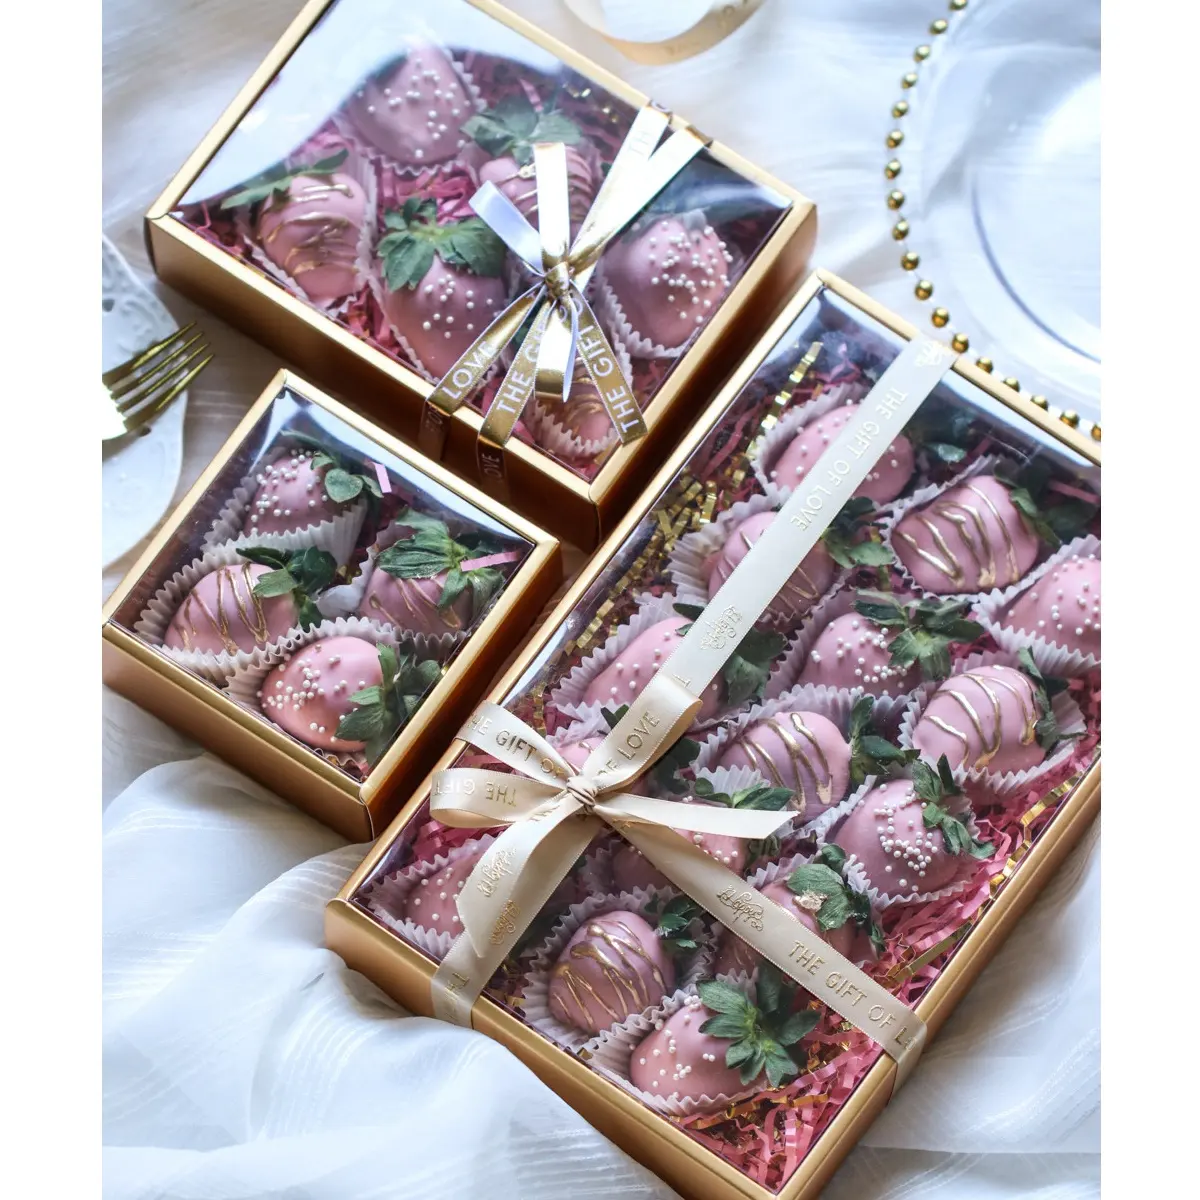 IMEEカスタムラグジュアリークリスマスレッドゴールドファンシーチョコレートクッキーキャンディーケーキベーカリーボックス、クリアリッド付きバレンタインデーギフトボックス